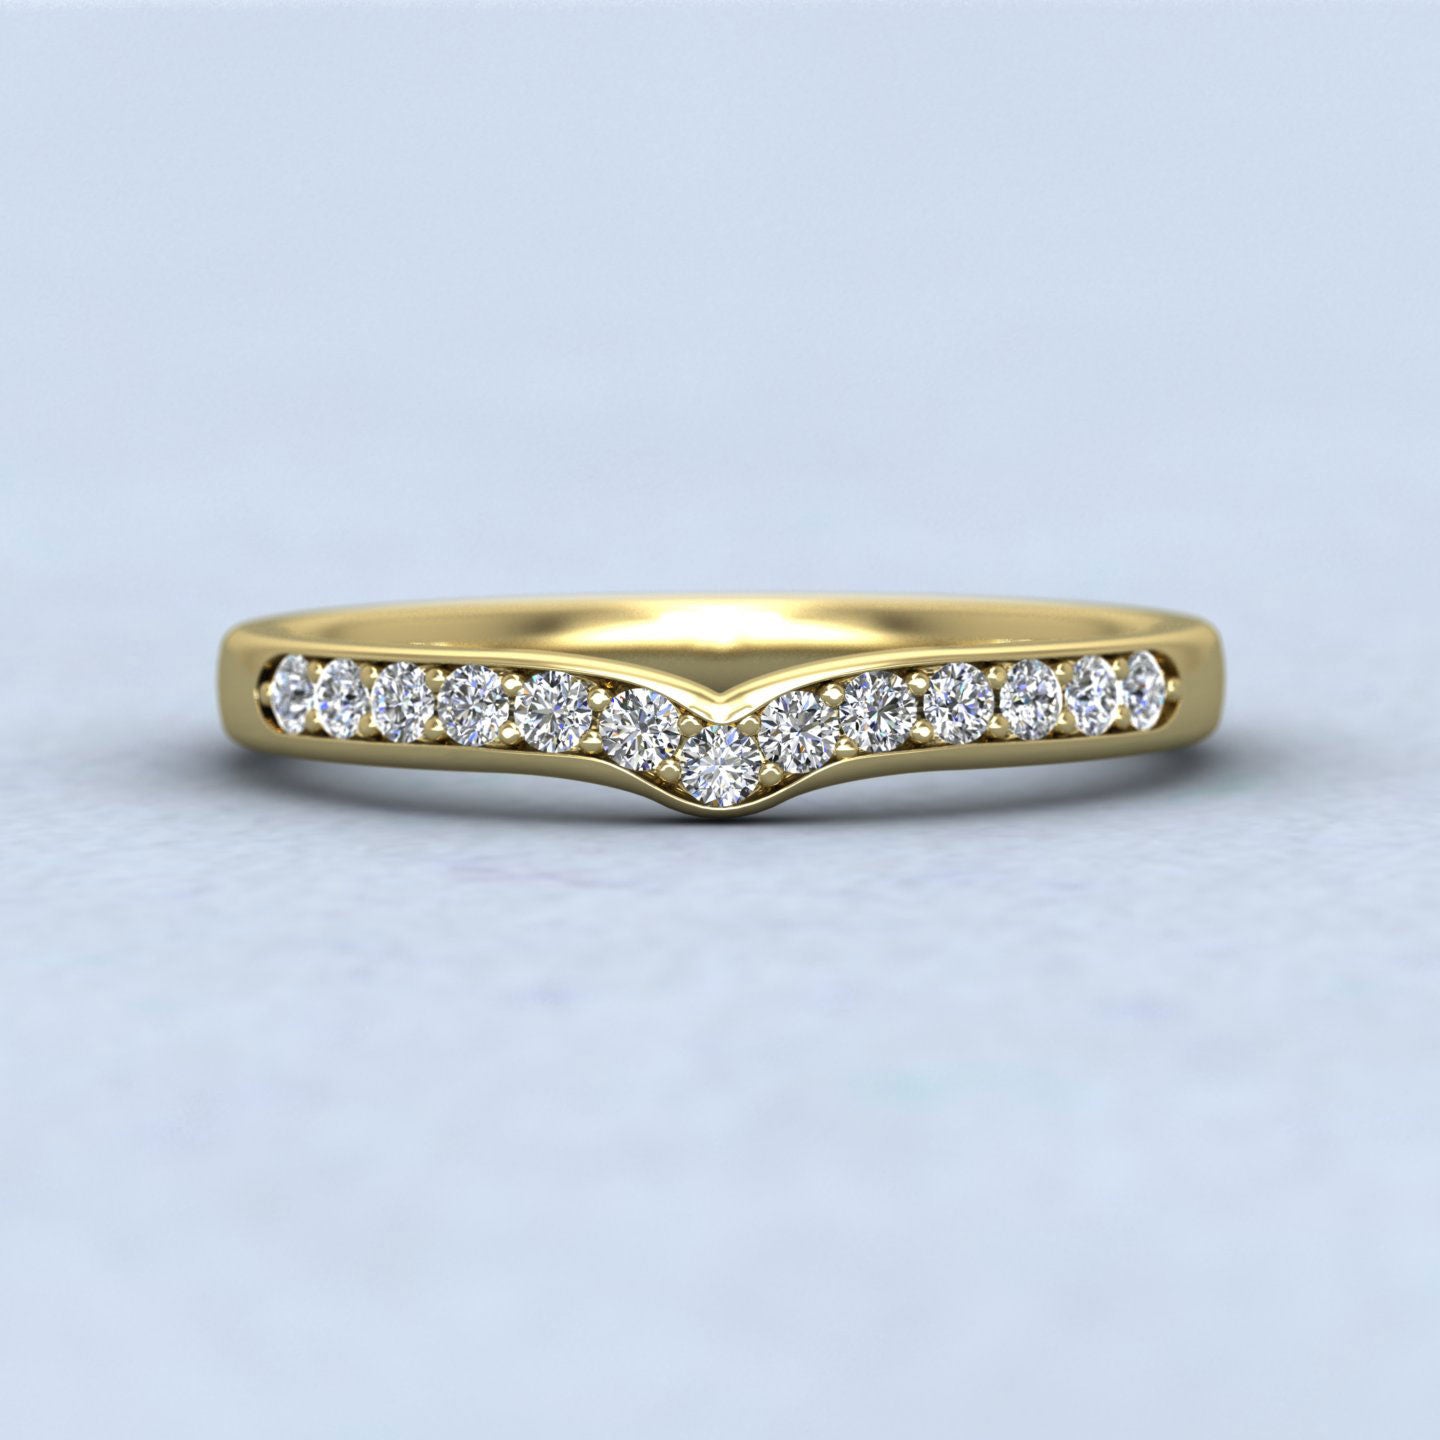 Slight Wishbone Shaped Bead Set Diamond Wedding Ring In 18ct Yellow Gold 2.25mm Wide